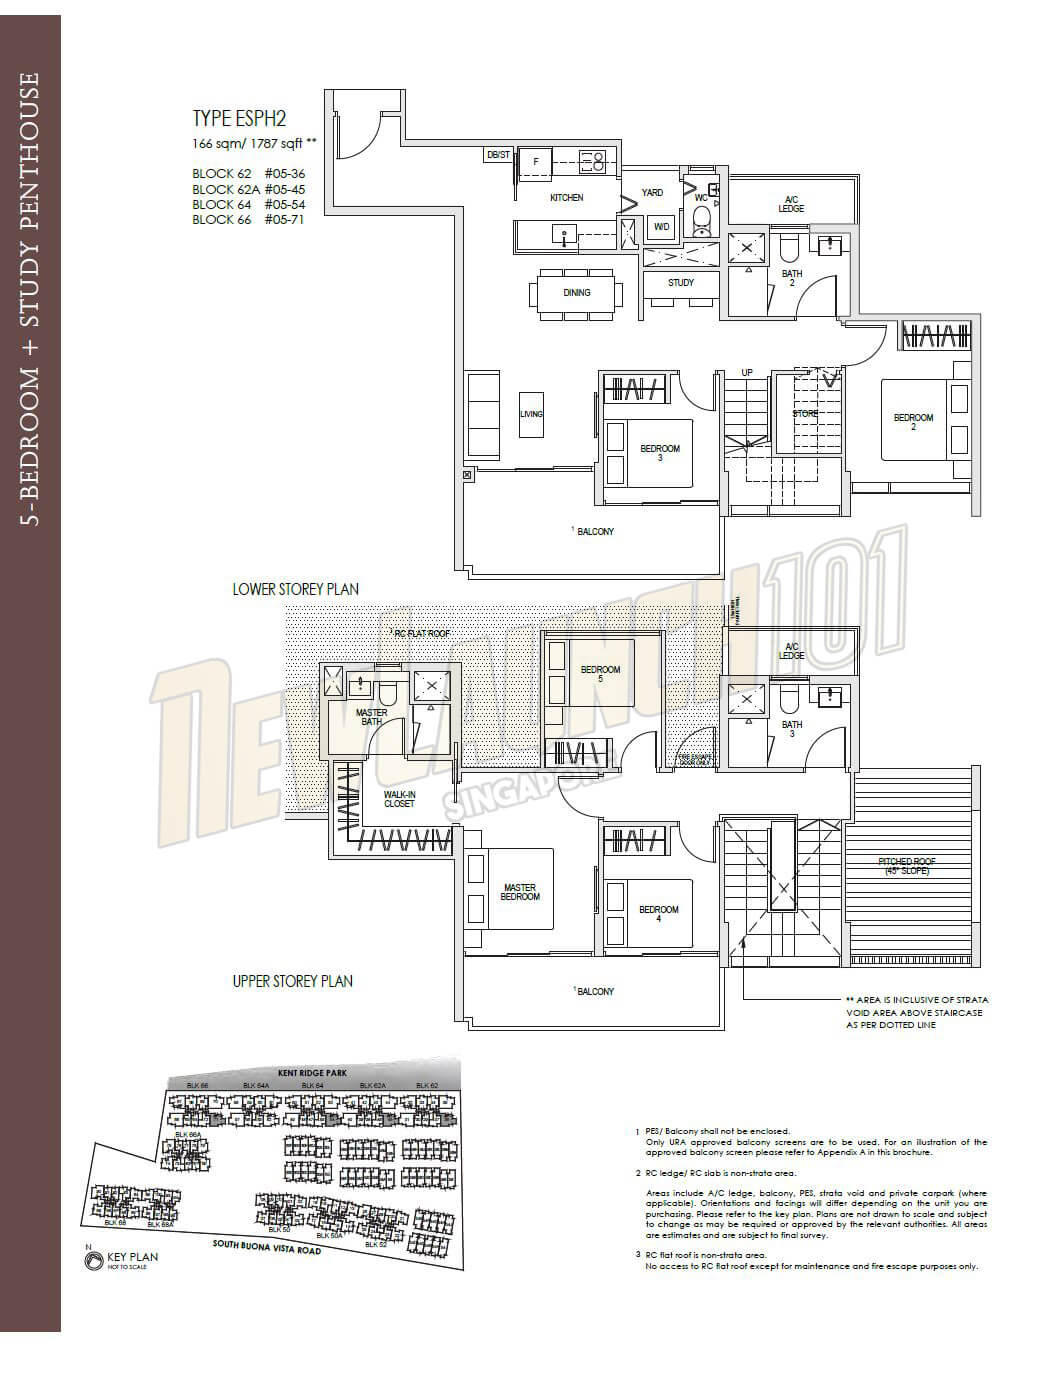 Kent Ridge Hill Residences Floor Plan 5-Bedroom Study PH Type ESPH2